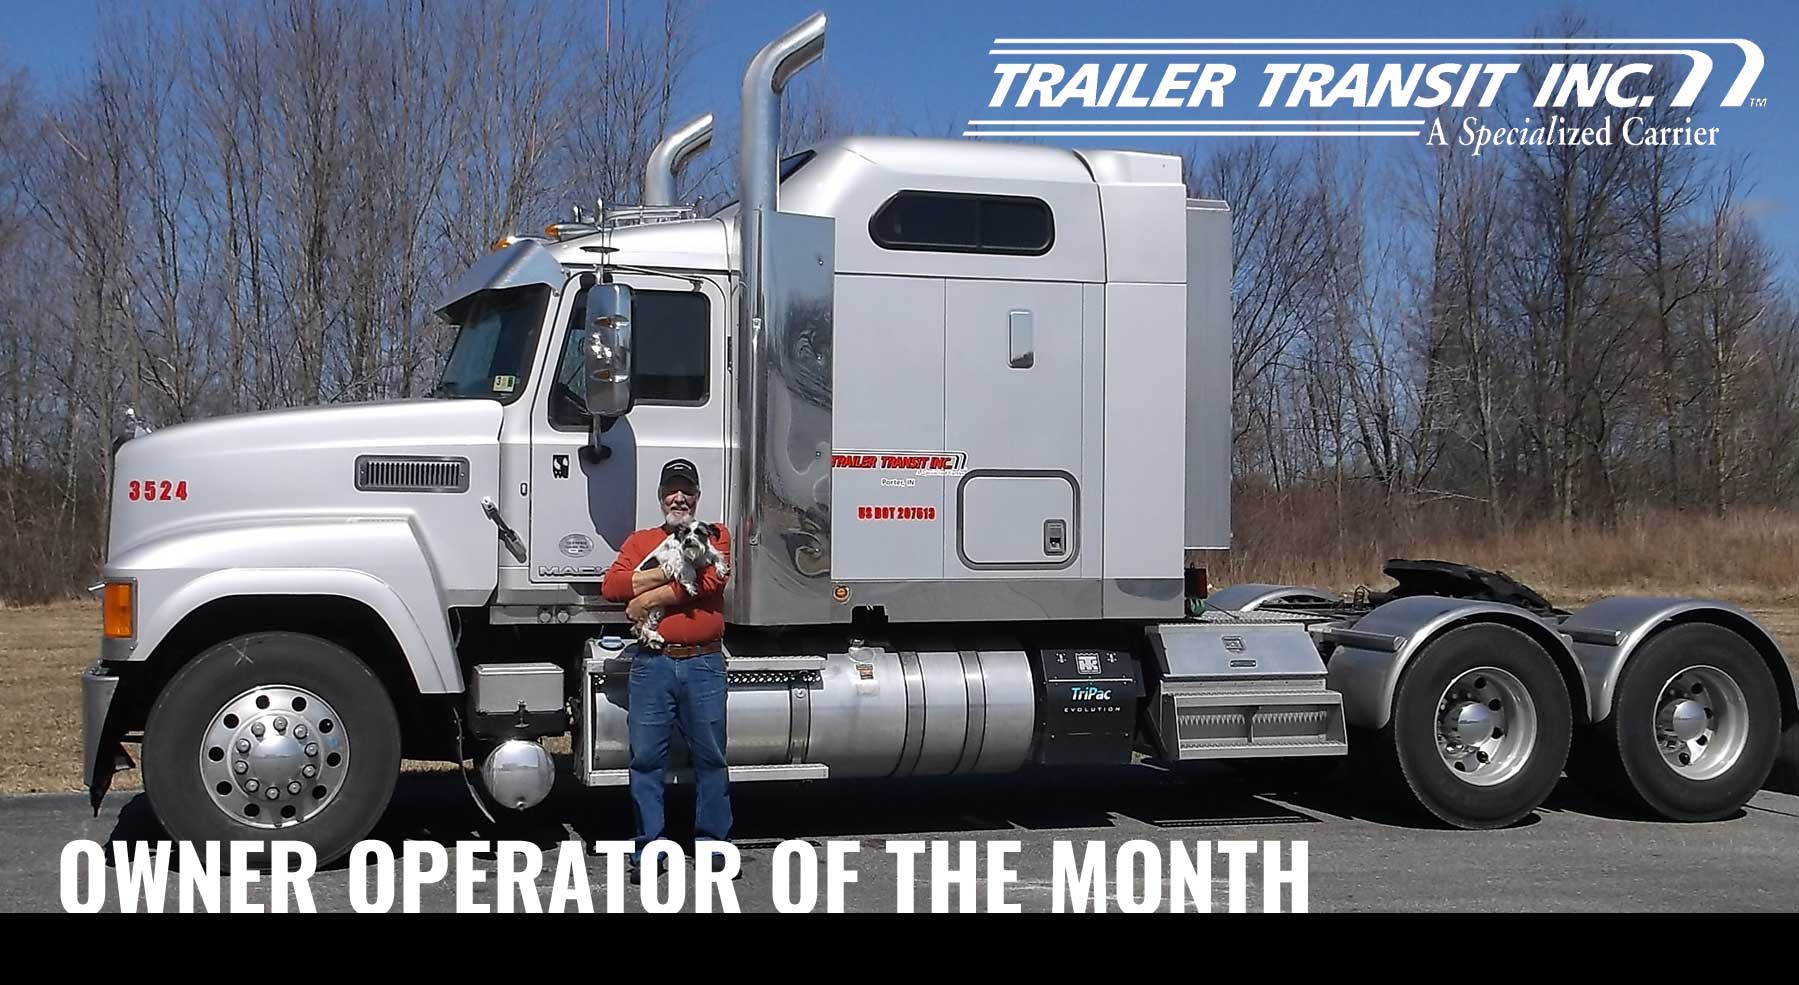 Trailer Transit Inc. | Trailer transit inc owner operator of the month.